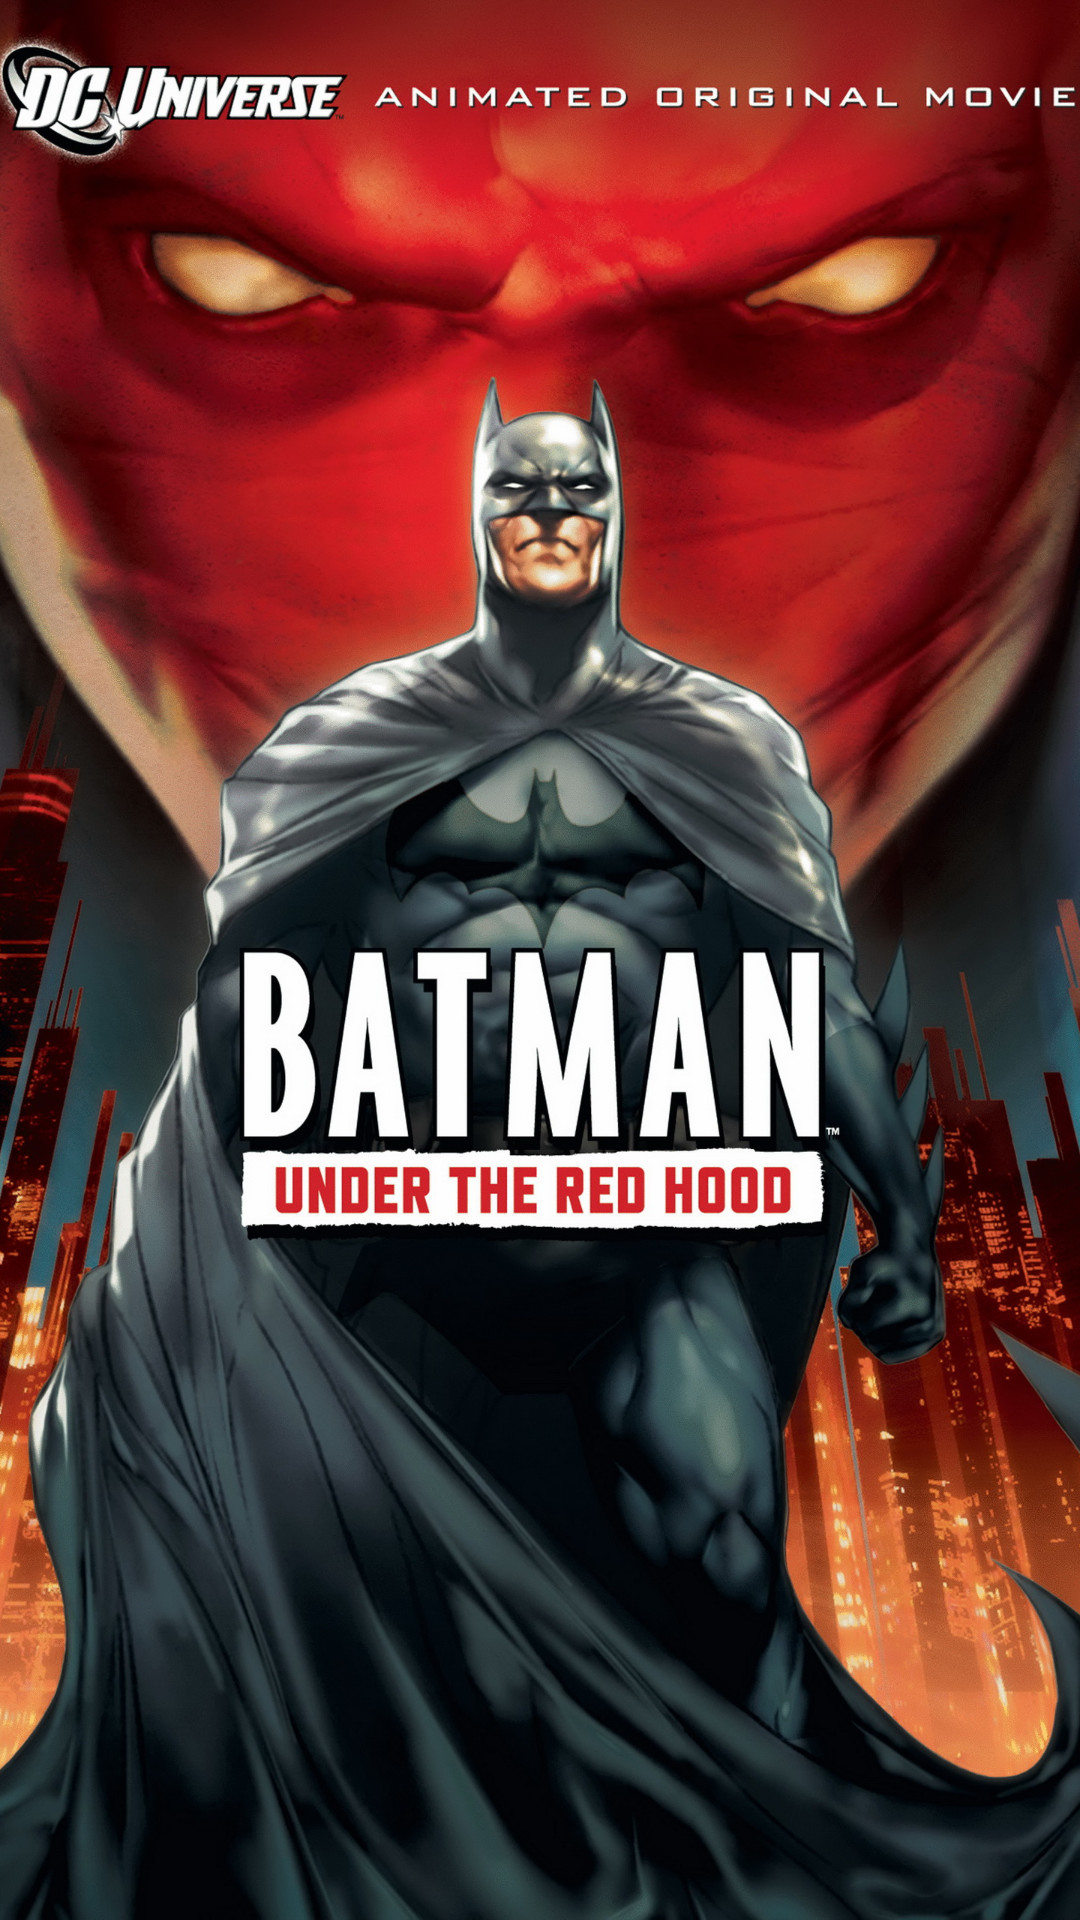 Batman – Under the Red Hood Galaxy S5 Wallpaper 1080×1920 1080 x 1920